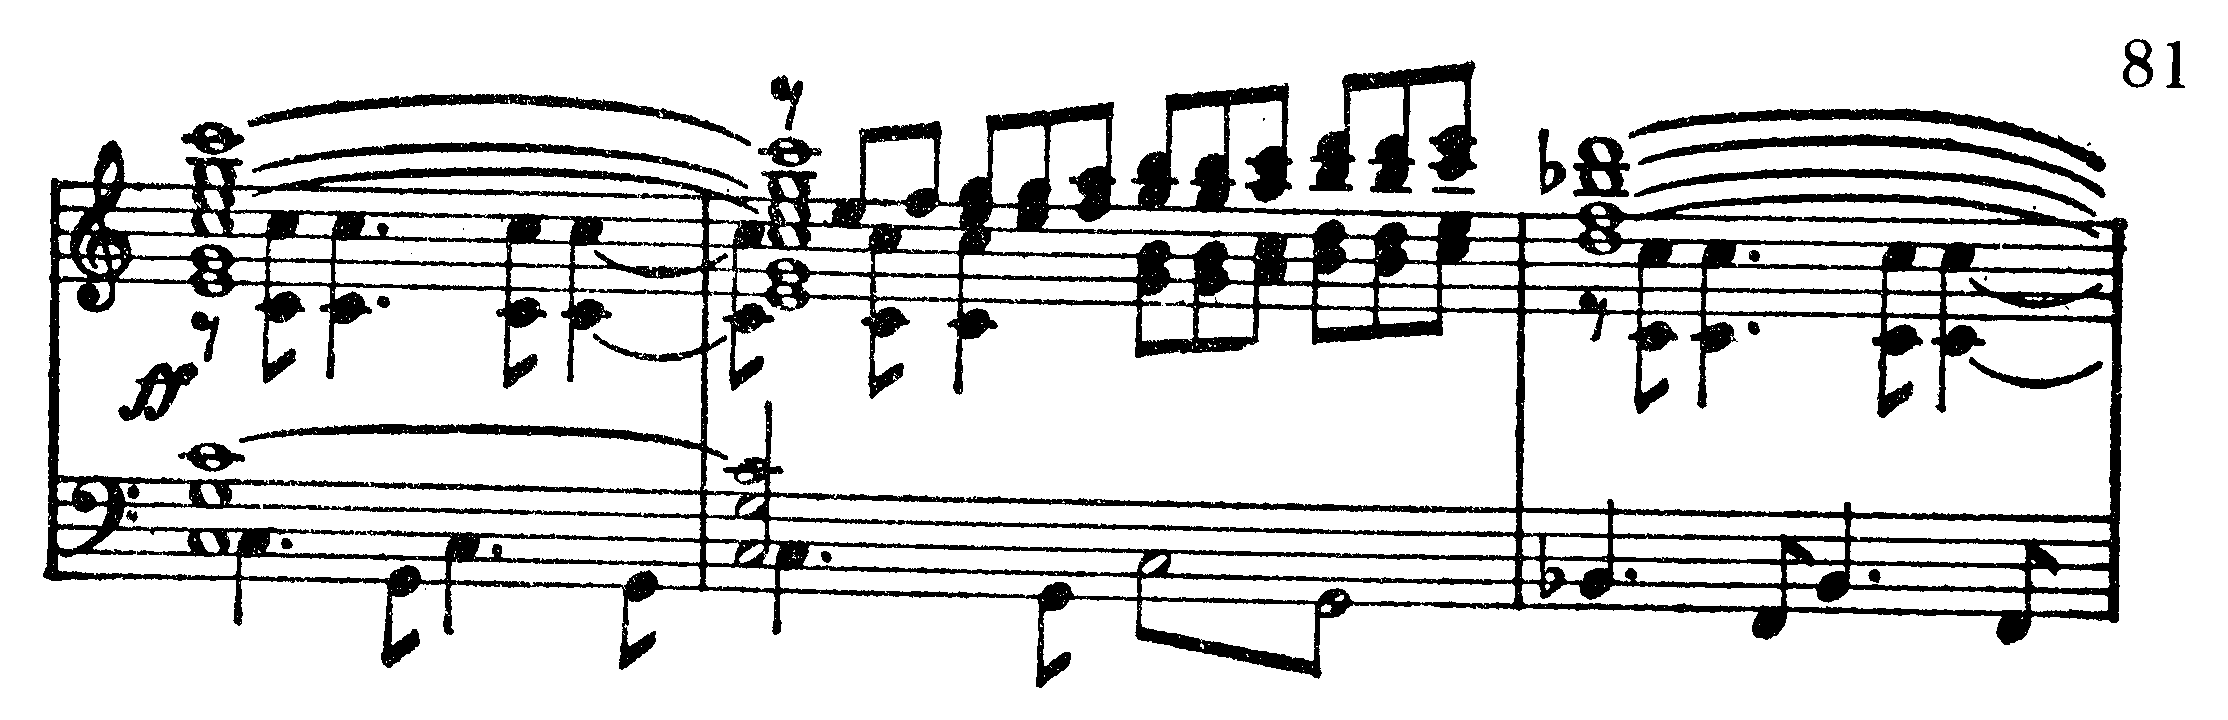 Symfoni, ex 81a